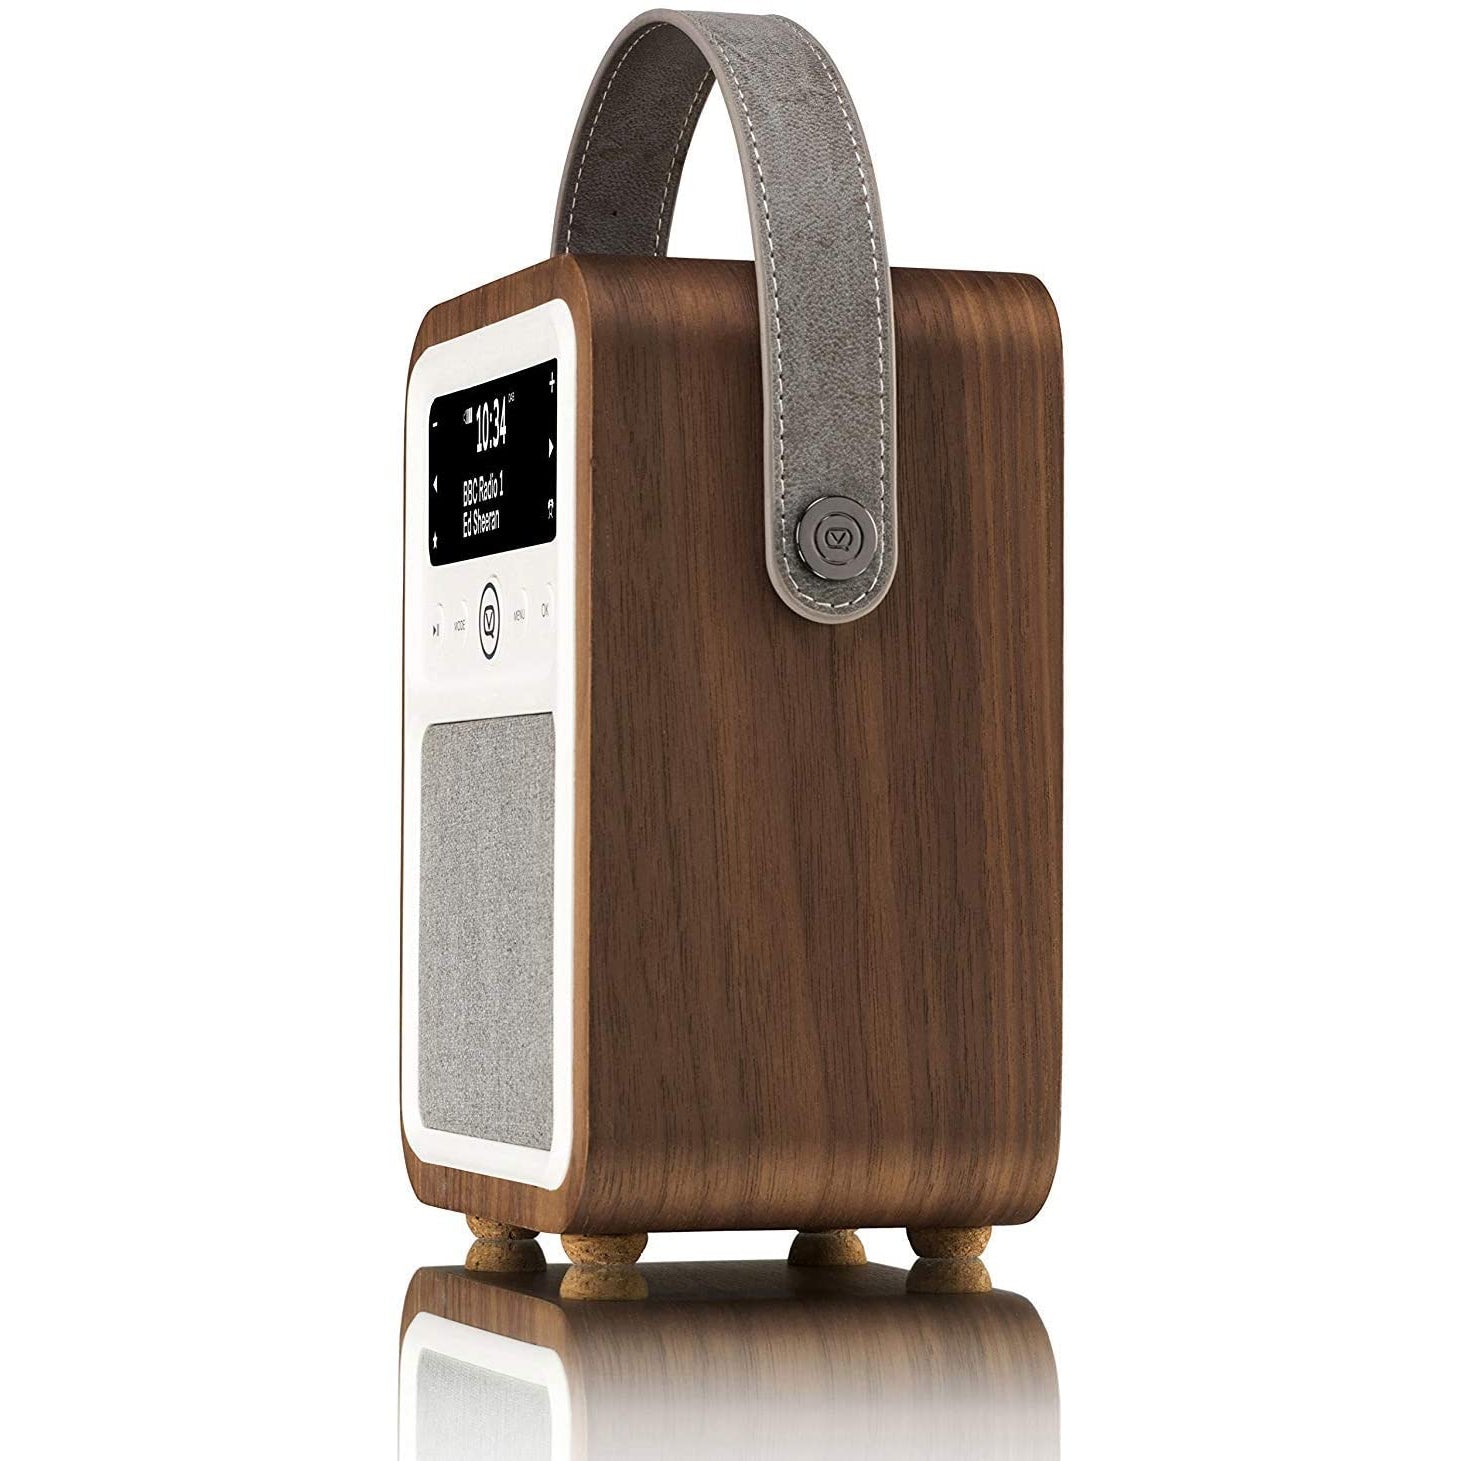 VQ Monty DAB Radio with Bluetooth, Radio Alarm Clock